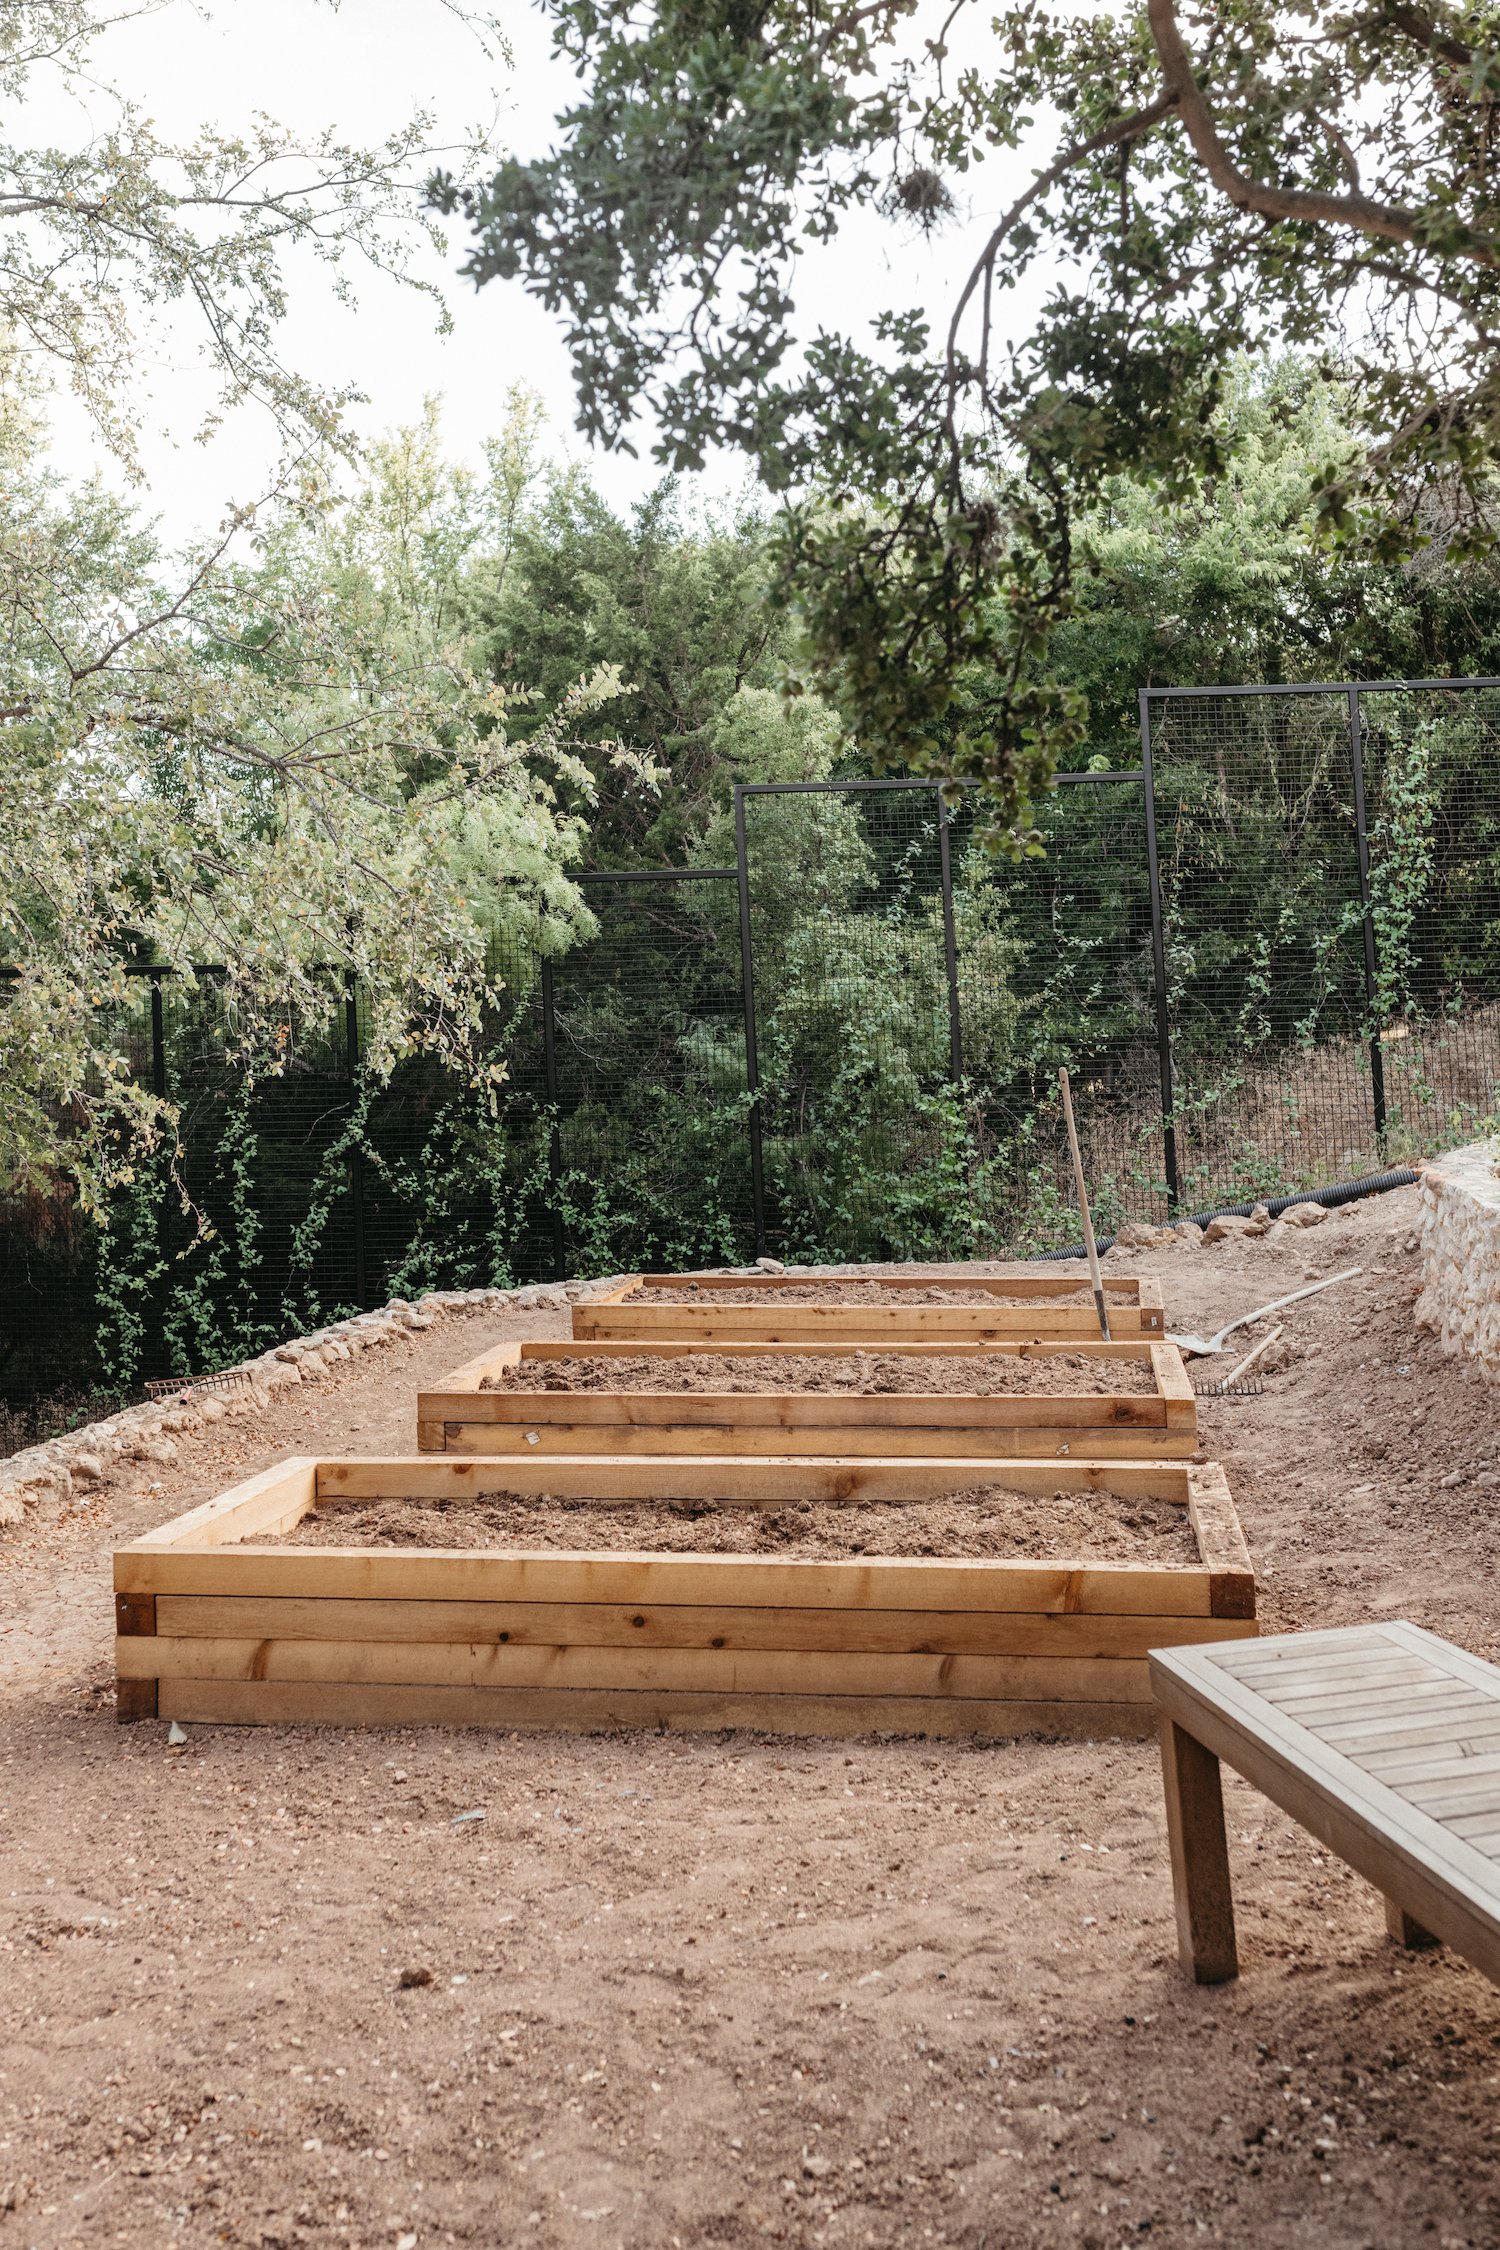 camille styles backyard - DIY raised vegetable garden beds